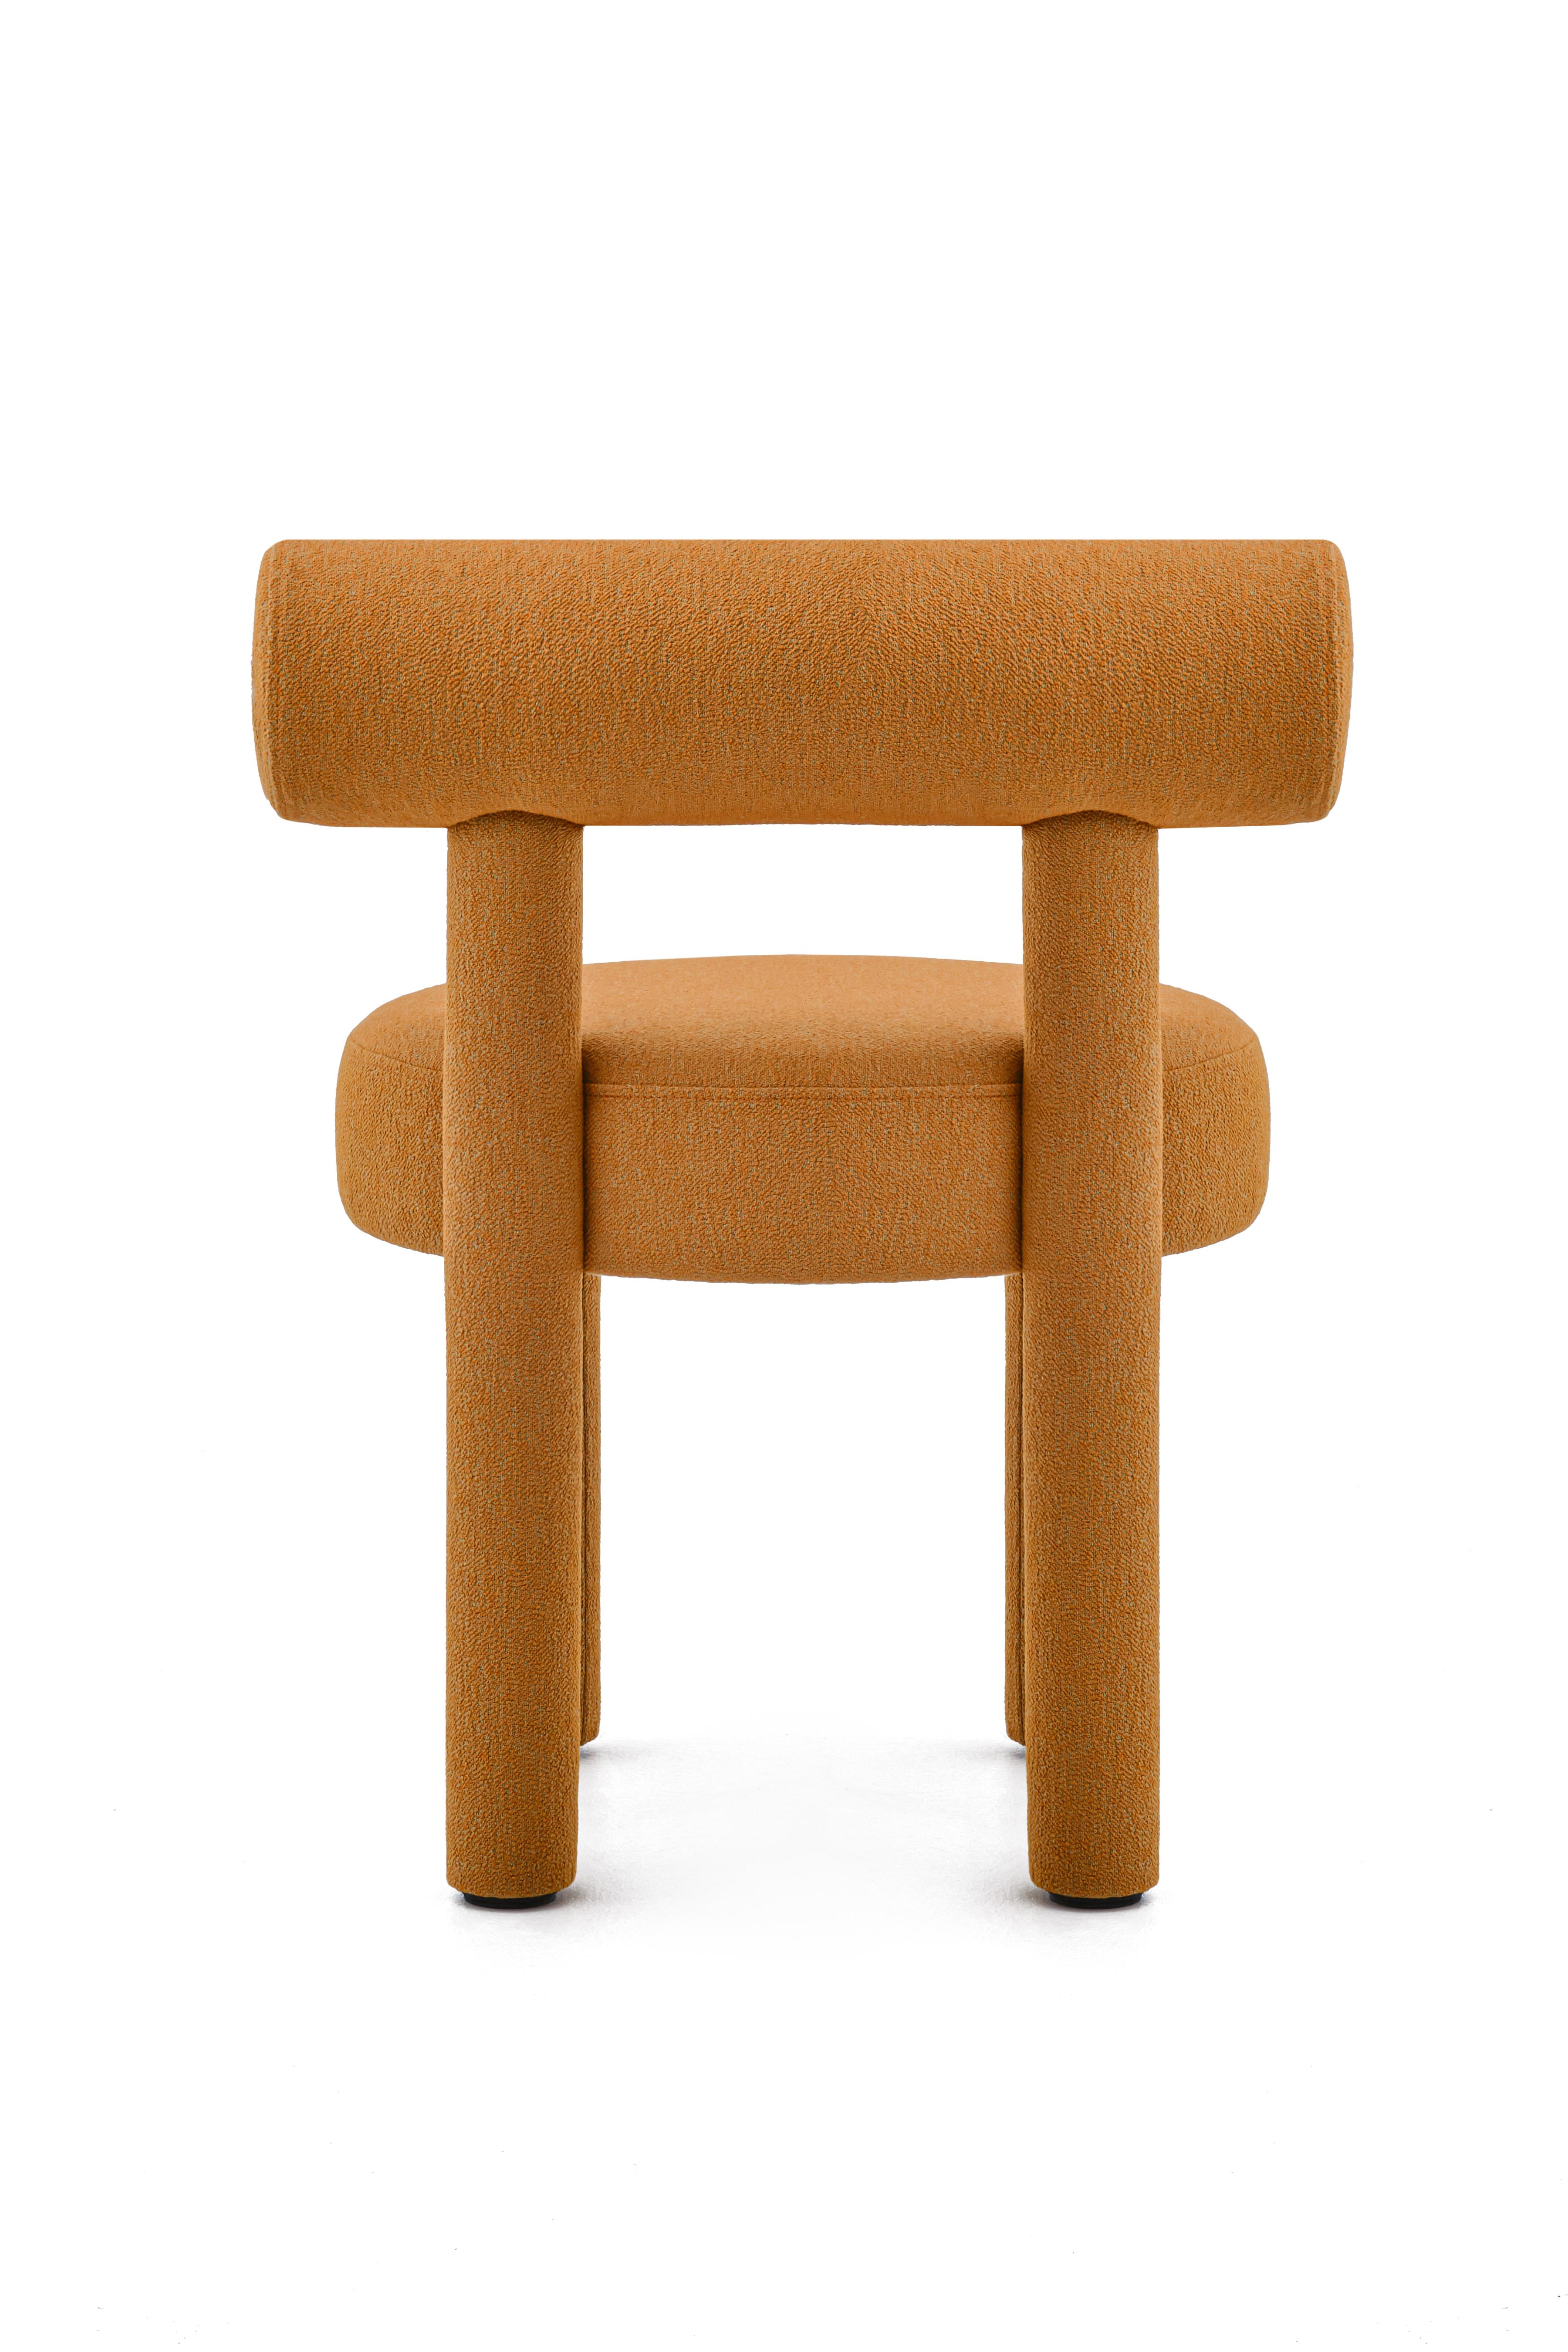 Wool Contemporary Orange Chair 'Gropius CS1' by Noom, Sera Rohi, Chutney For Sale